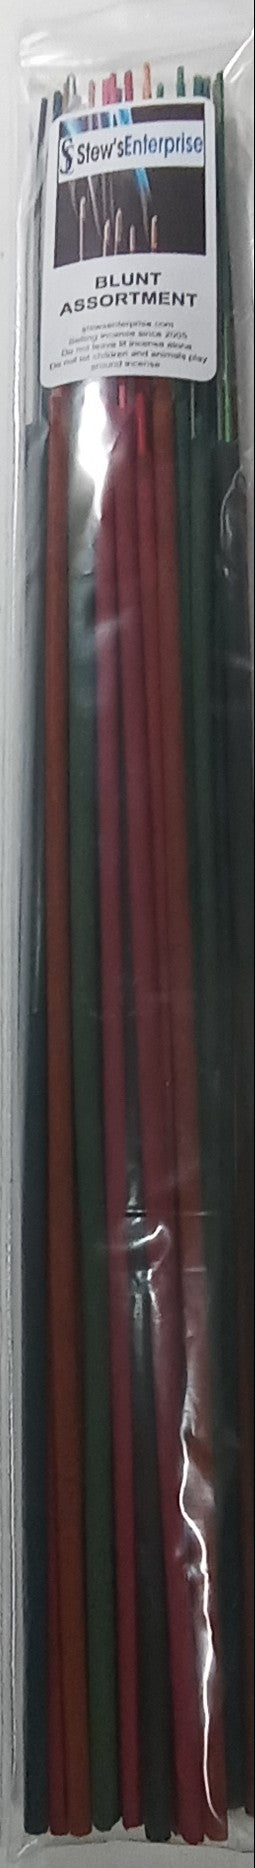 Assorted Blunt Jumbo Incense Sticks--25 Sticks--1 Pack